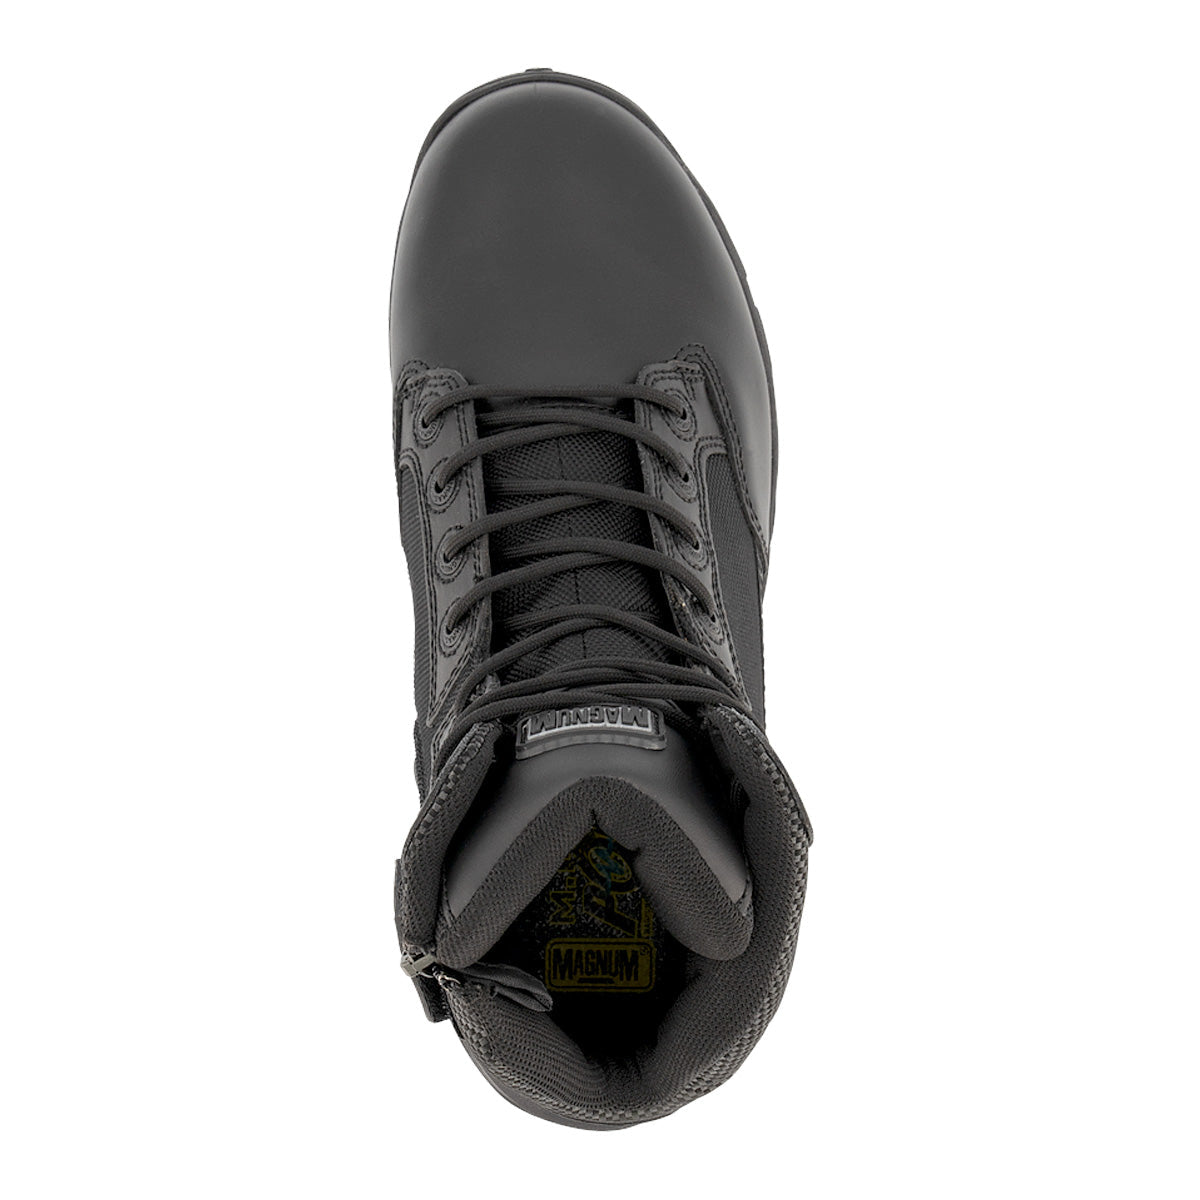 Magnum Strike Force 6.0 Side-Zip Composite Toe Boot Black Footwear Magnum Footwear Tactical Gear Supplier Tactical Distributors Australia